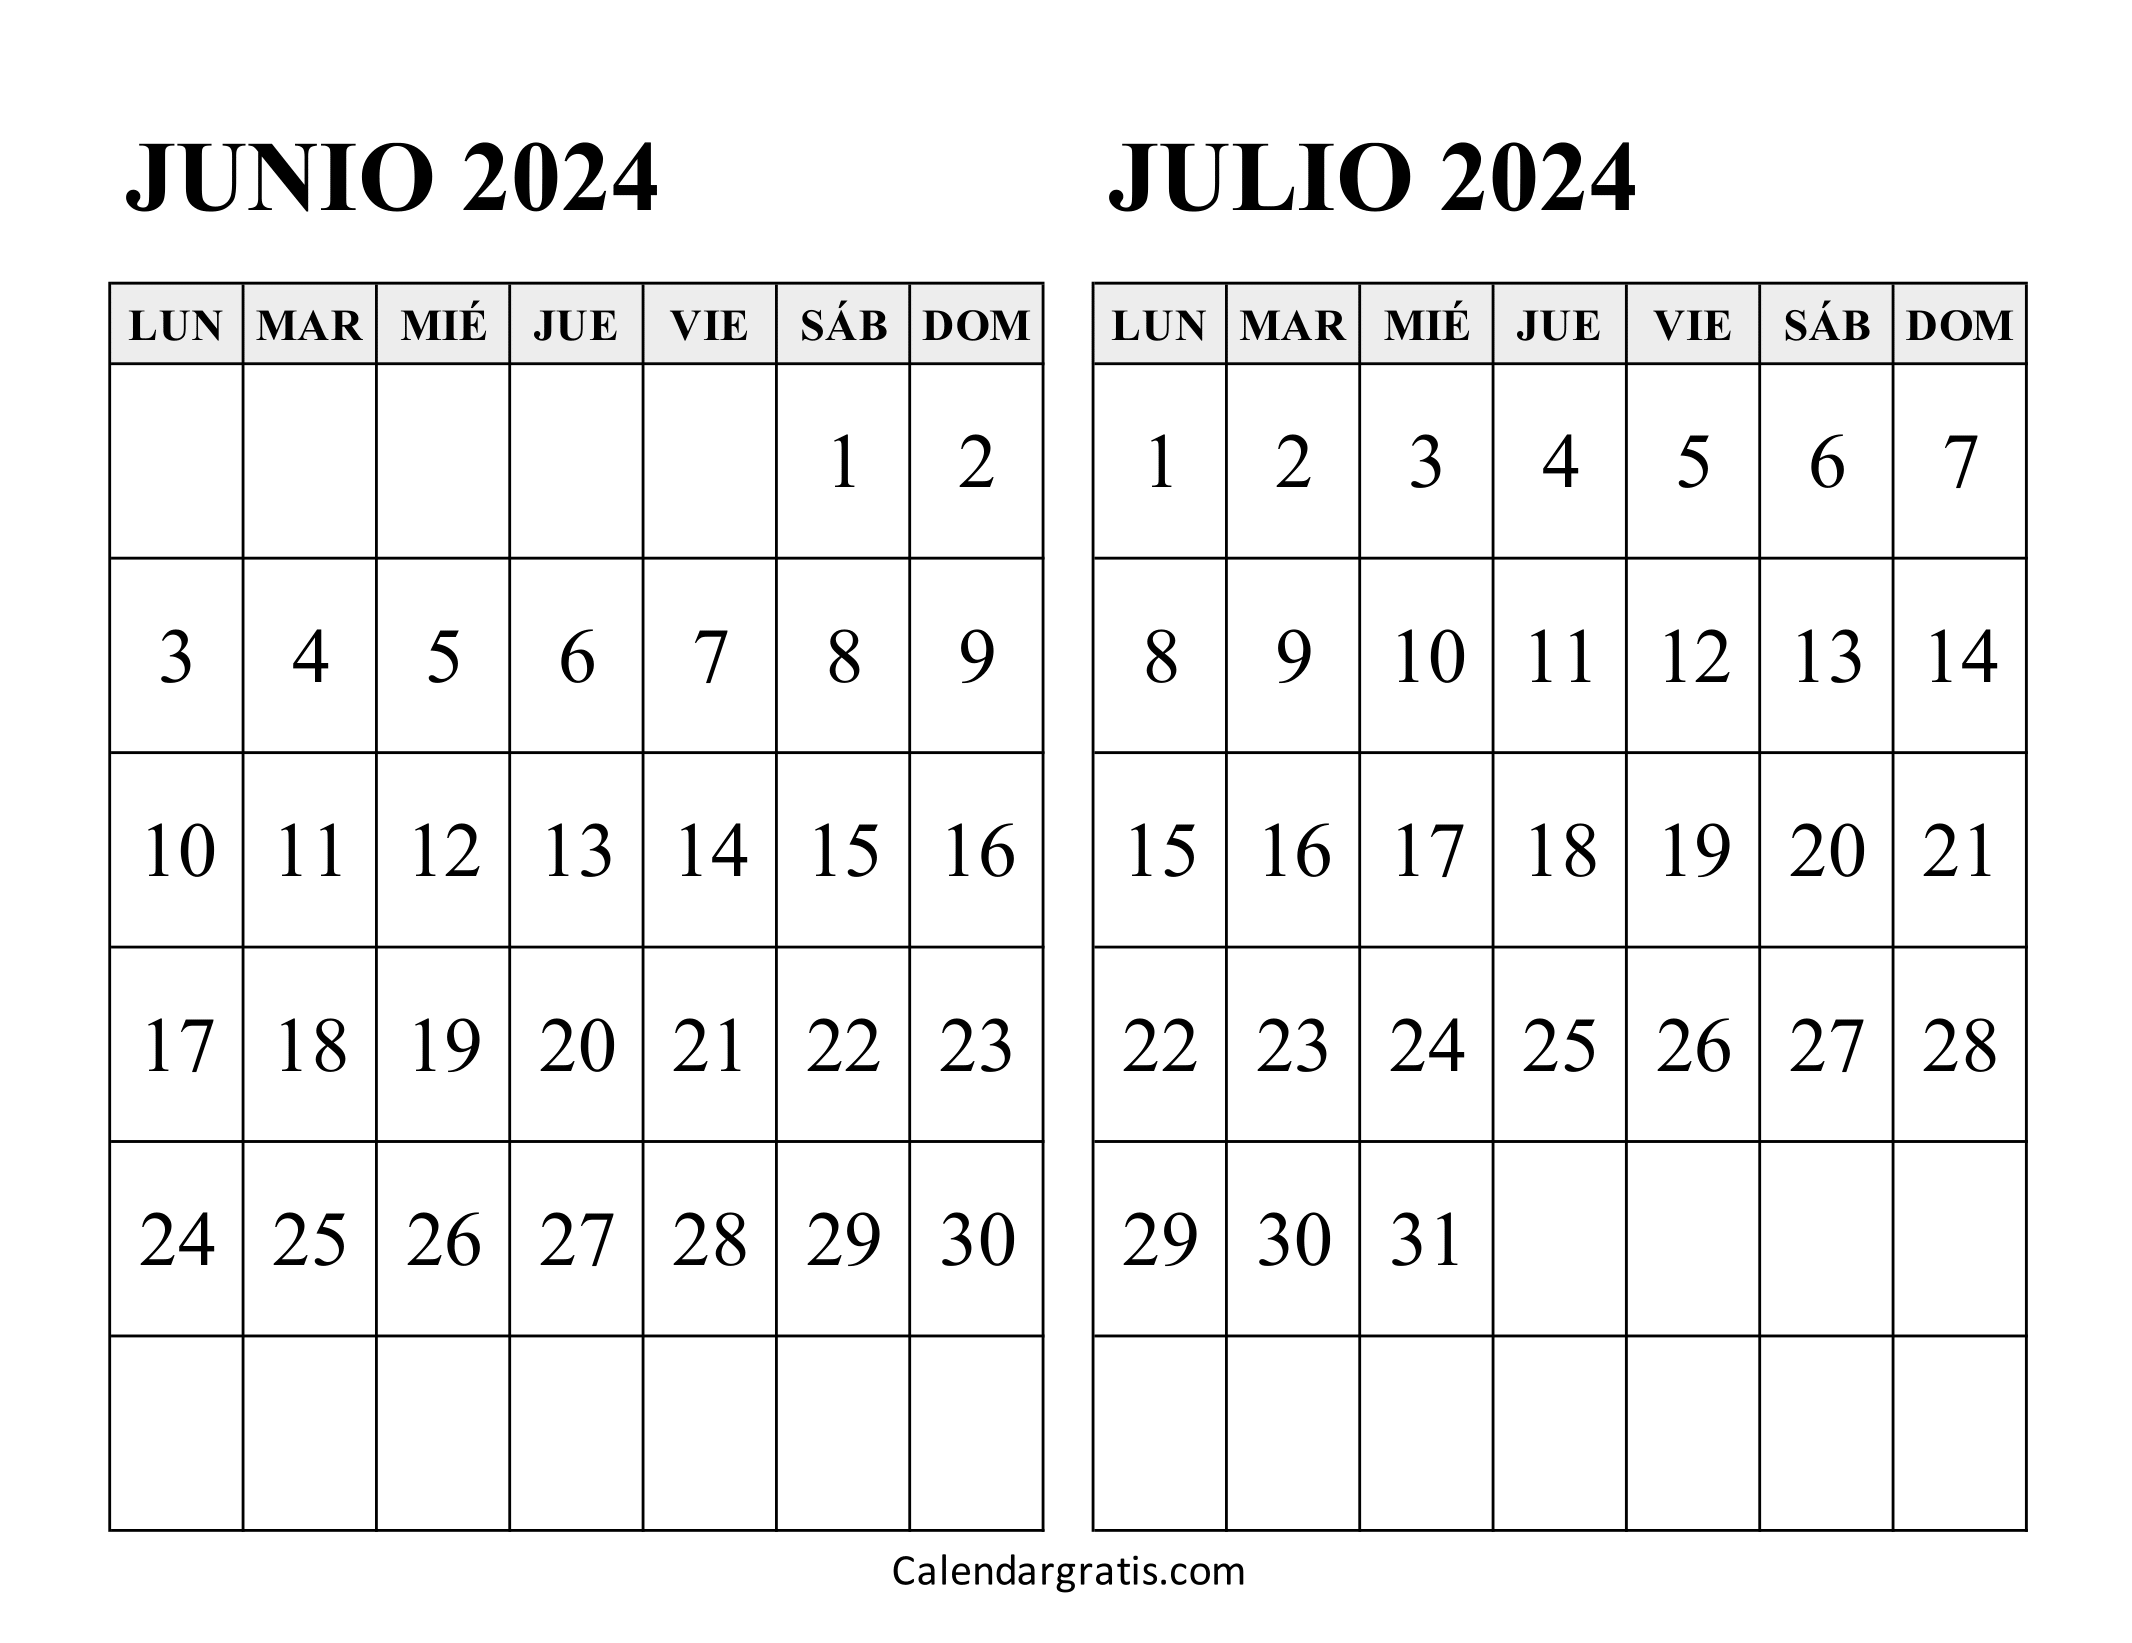 Calendario junio y julio 2024 para imprimir gratis